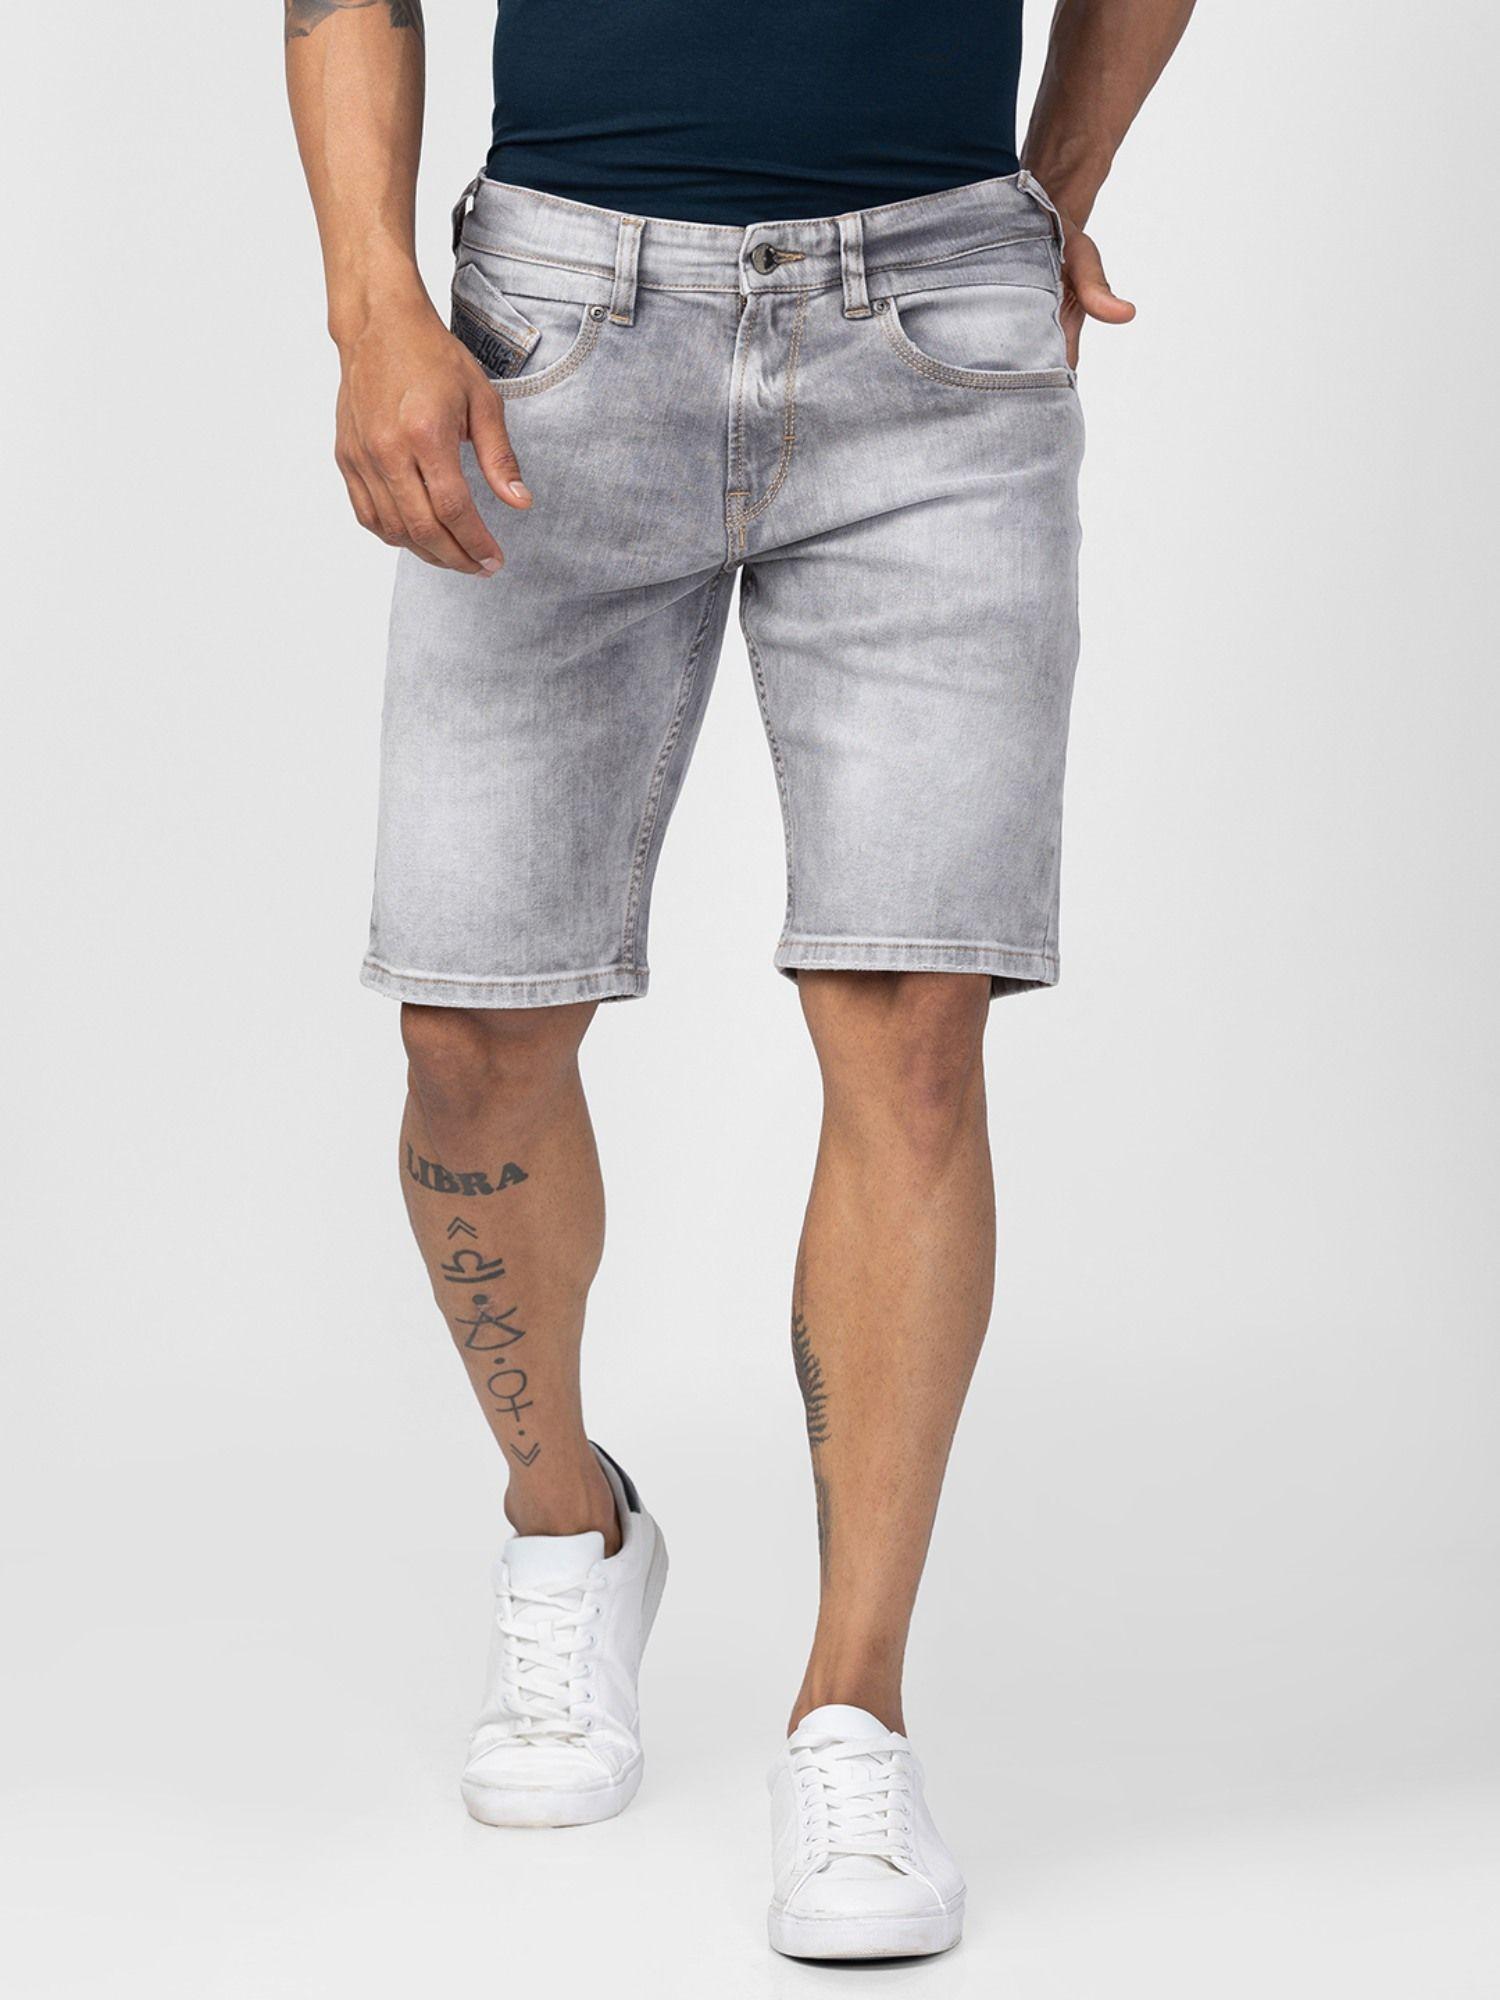 grey-cotton-blend-shorts-for-men